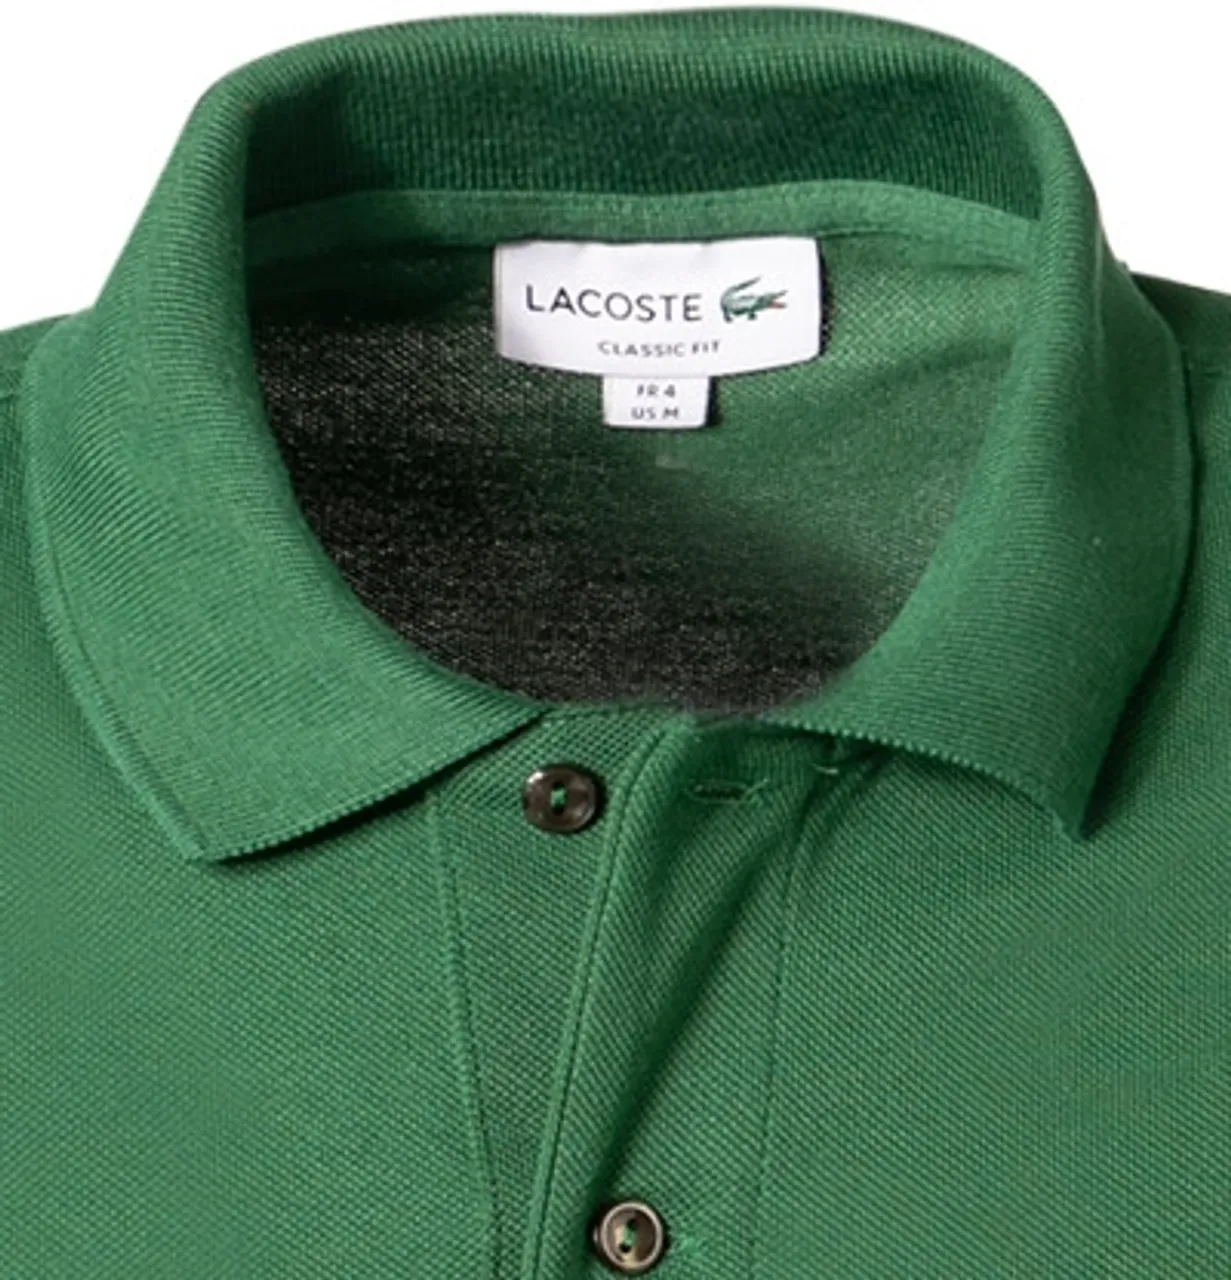 LACOSTE Herren Polo-Shirt grün Baumwoll-Piqué